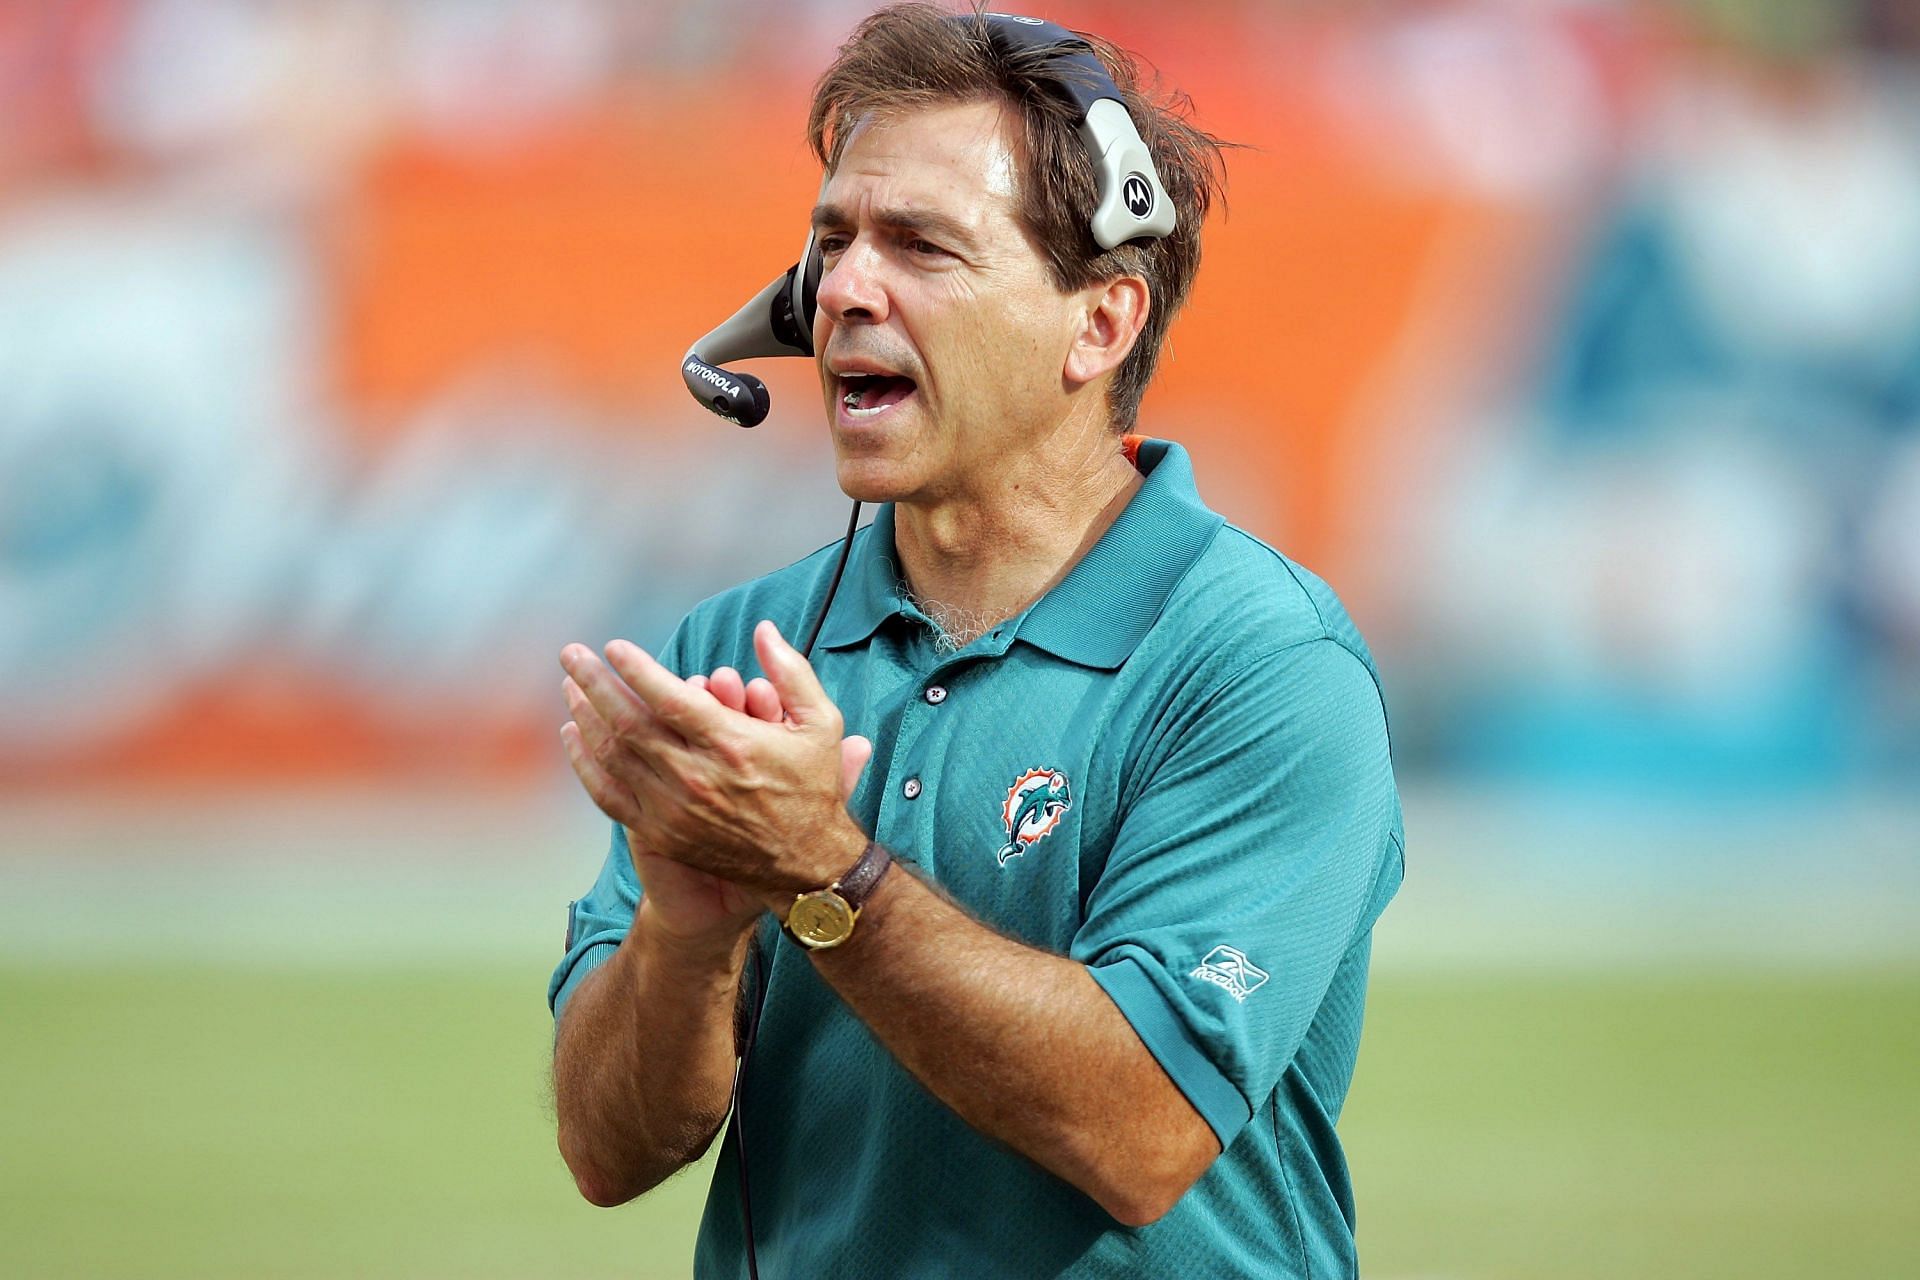 Miami Dolphins head coach Nick Saban